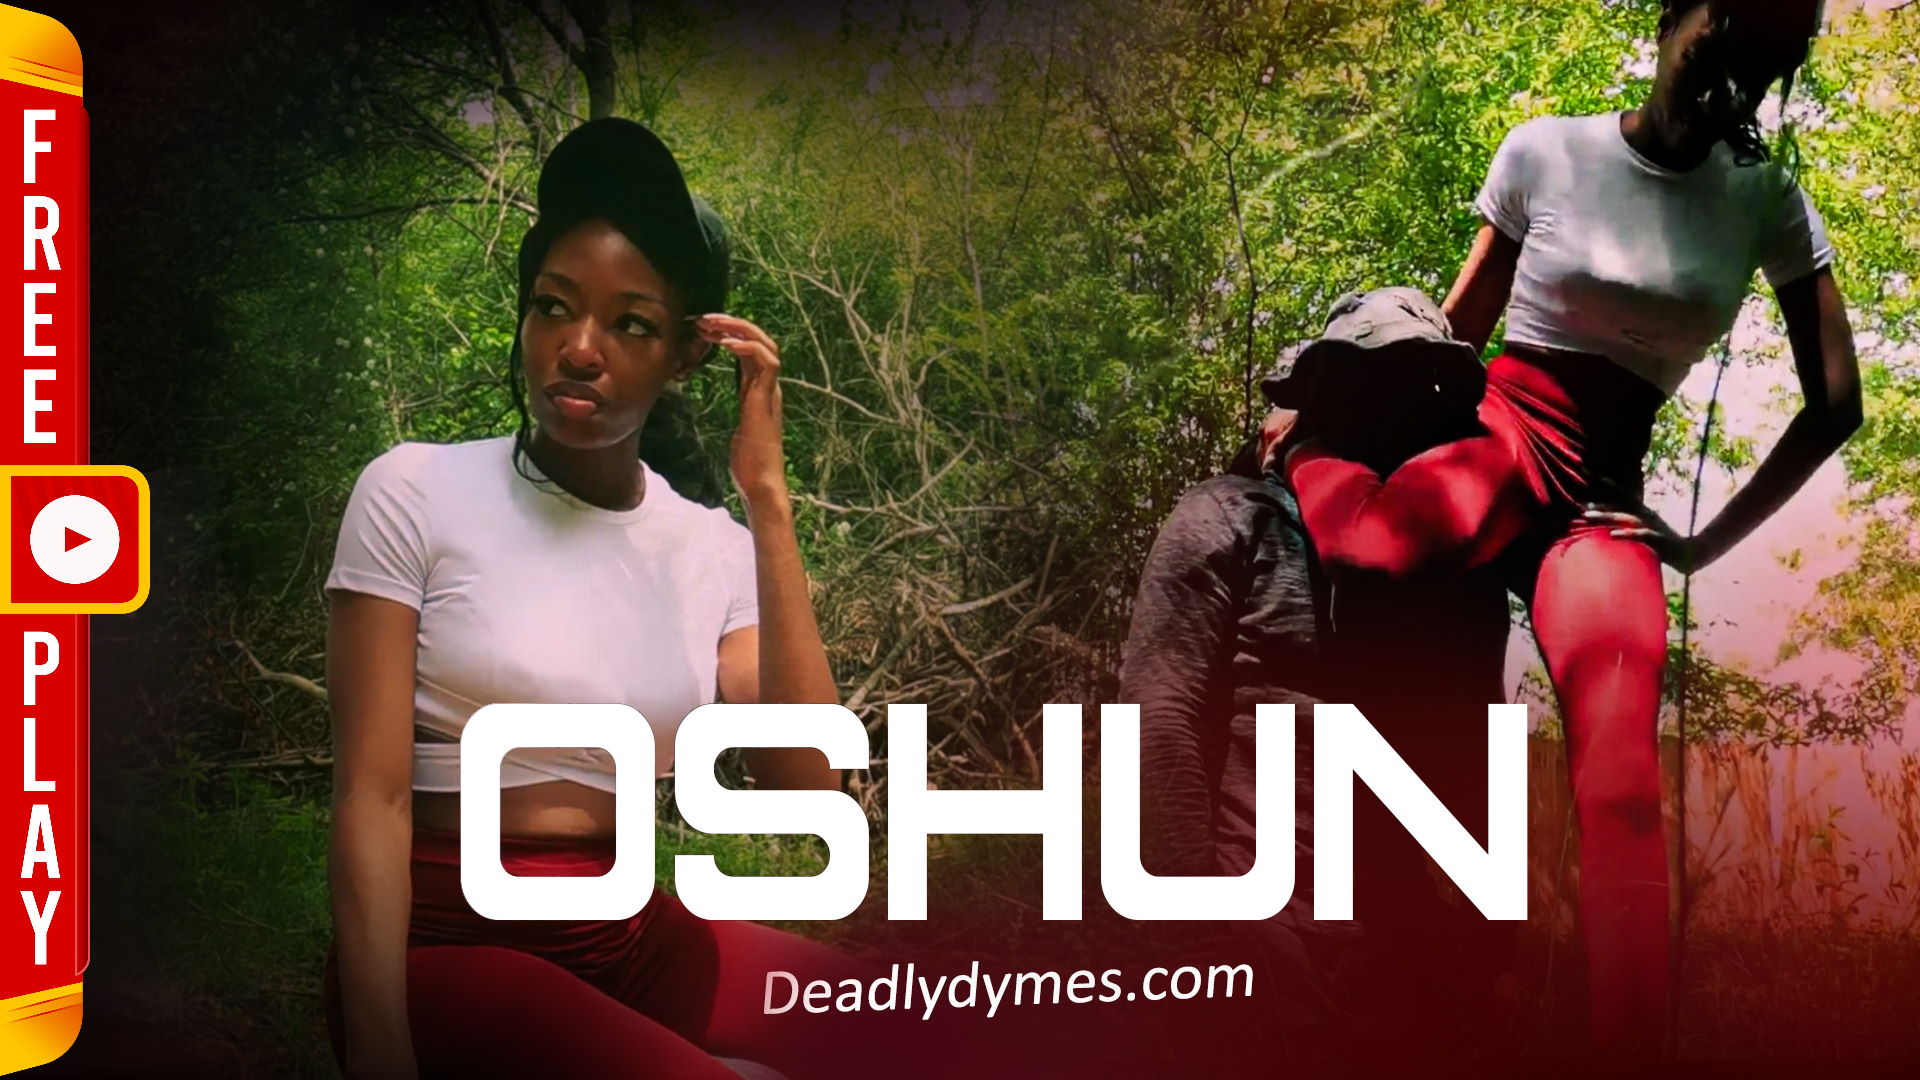 DeadlyDymes | Deadly Dymes | OSHUN: TRESPASS - WATCH NOW